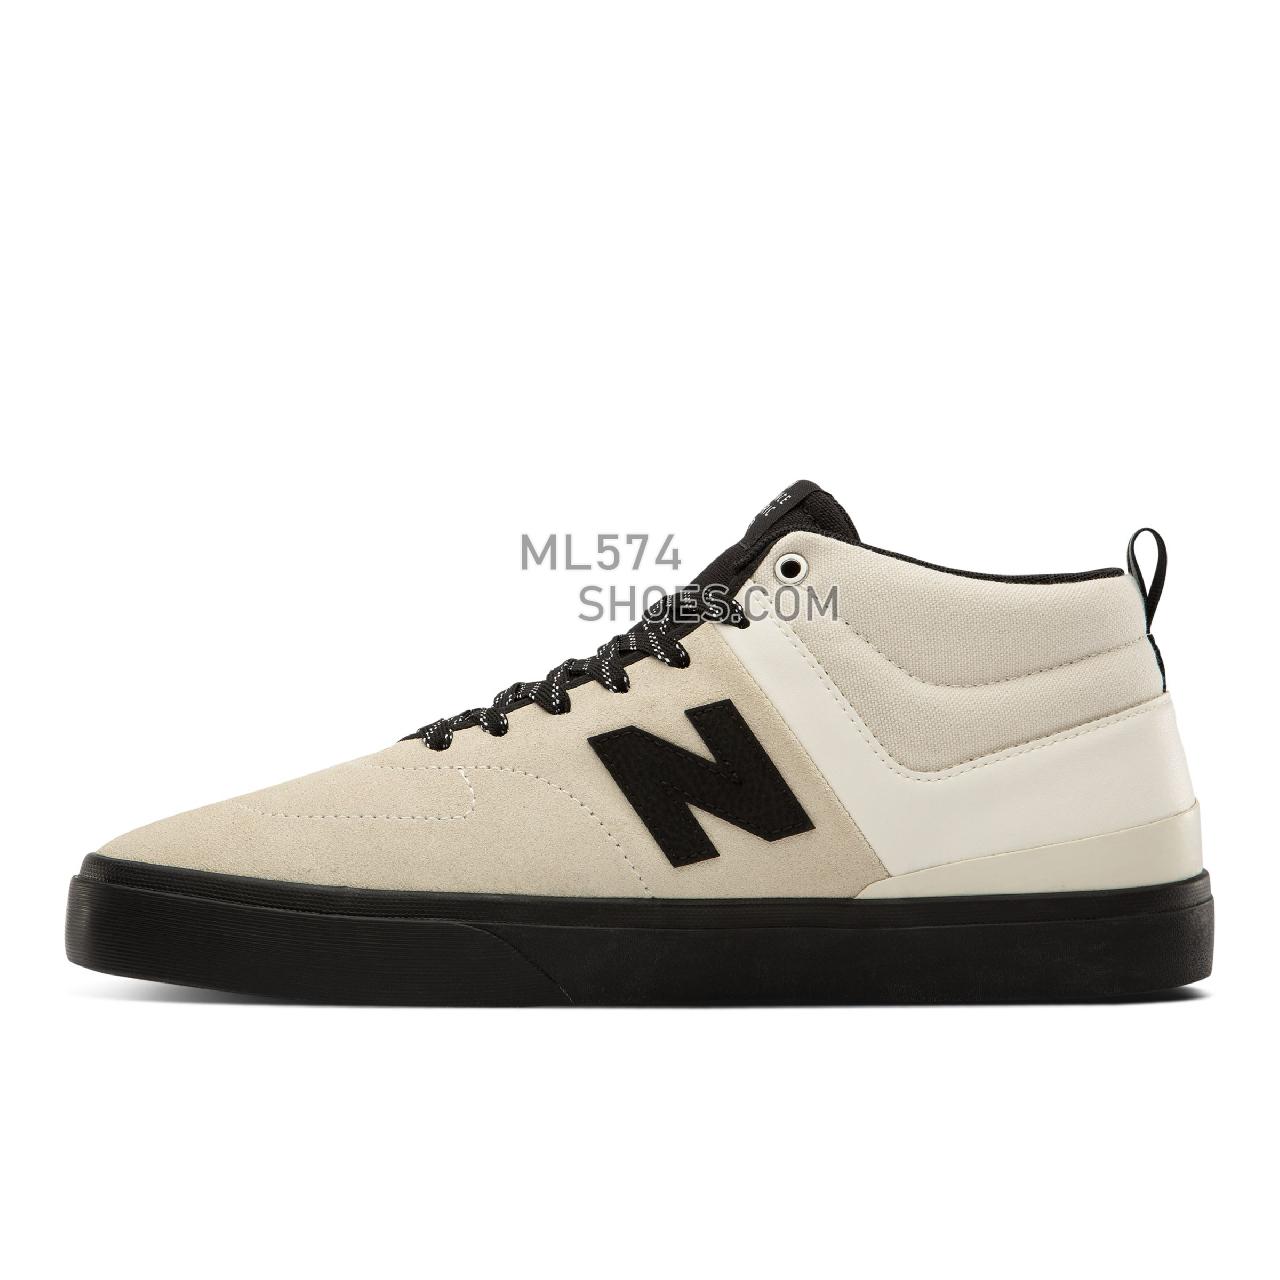 New Balance Numeric NM379 Mid - Men's NB Numeric Skate - White with Black - NM379MWB